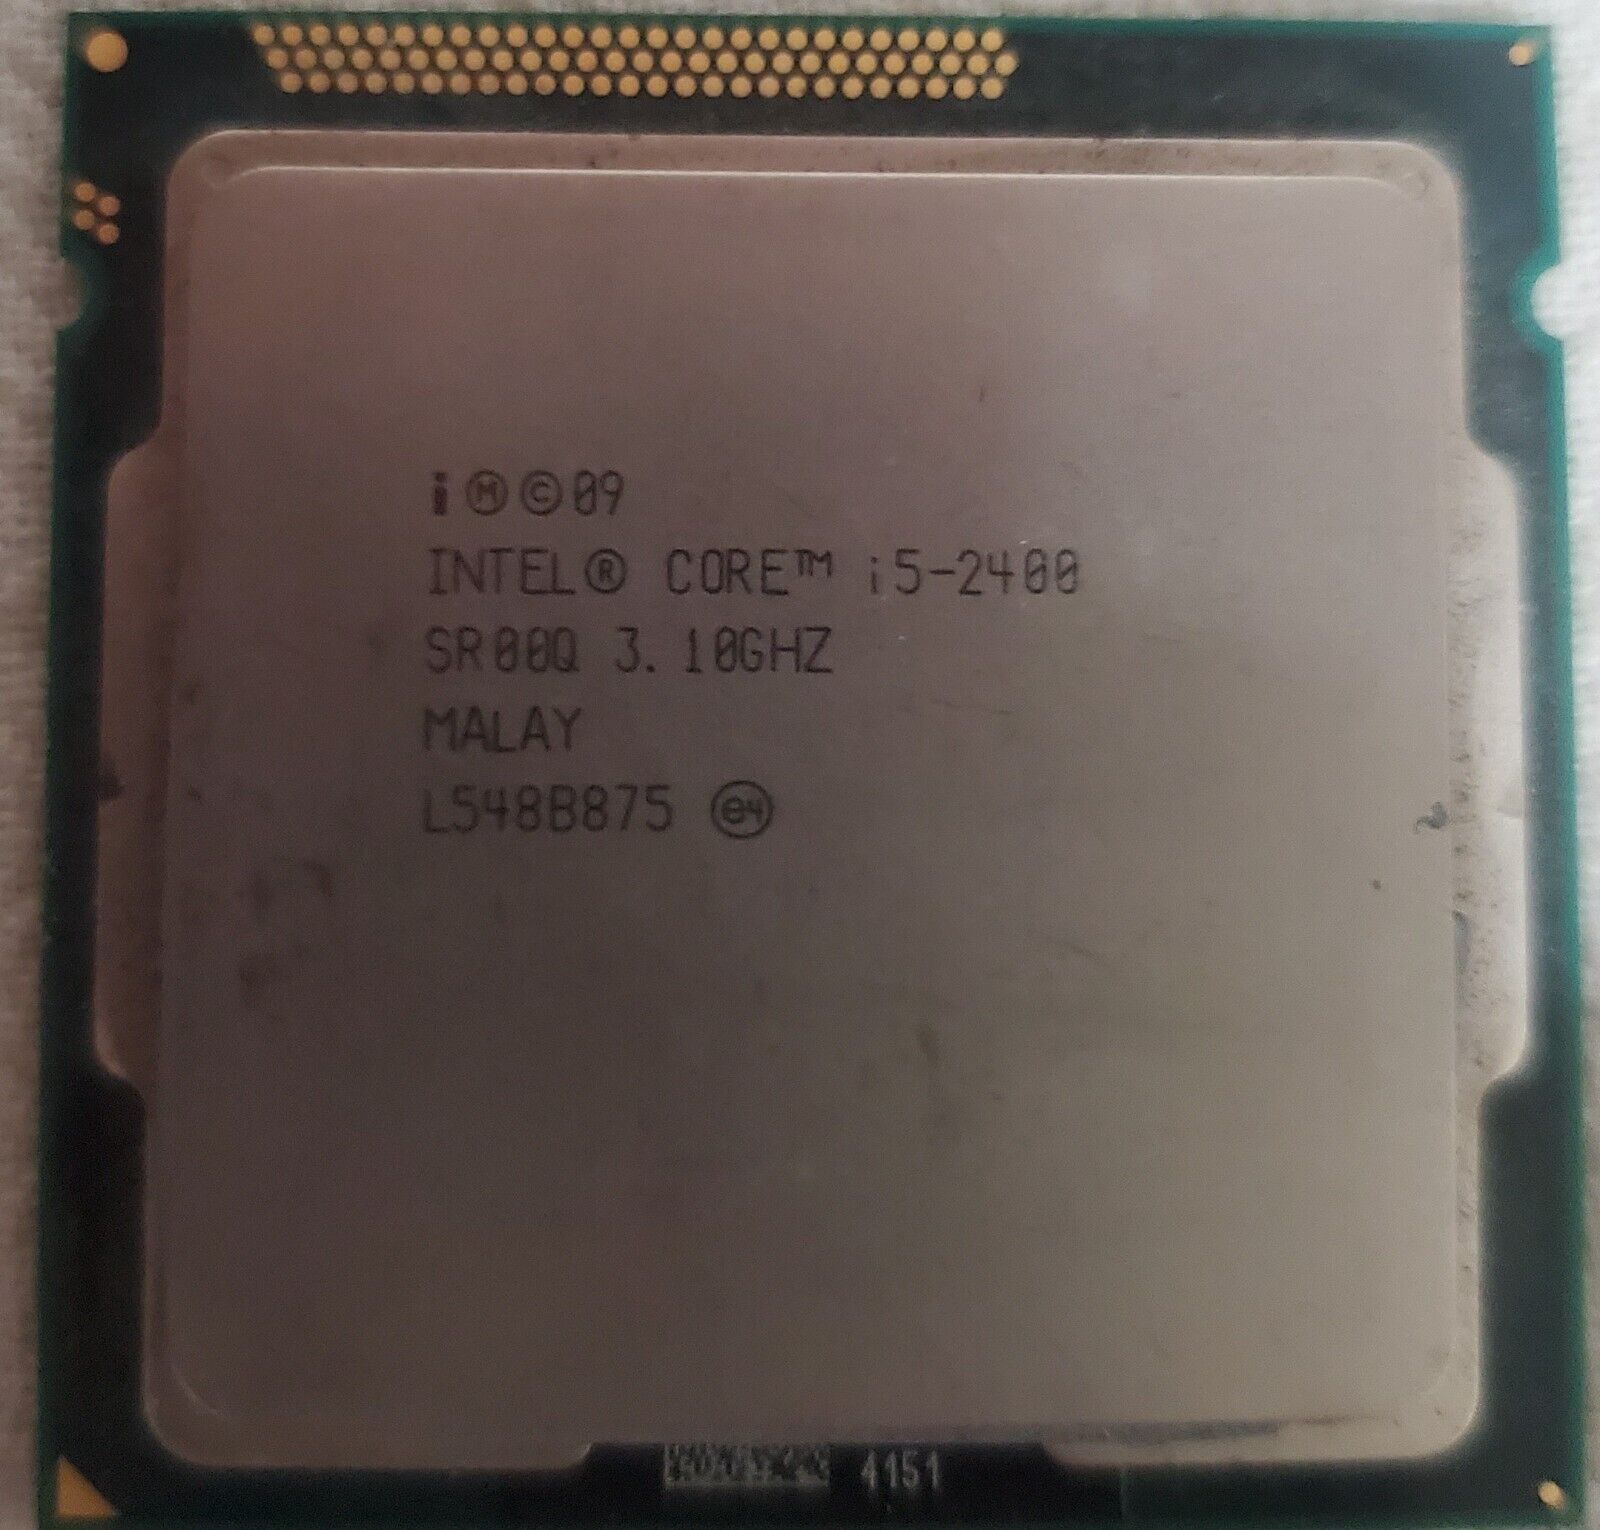 FOR SALE: LOT OF 10 - Quad Core i5-2400 3.1 GHz SR00Q Processors